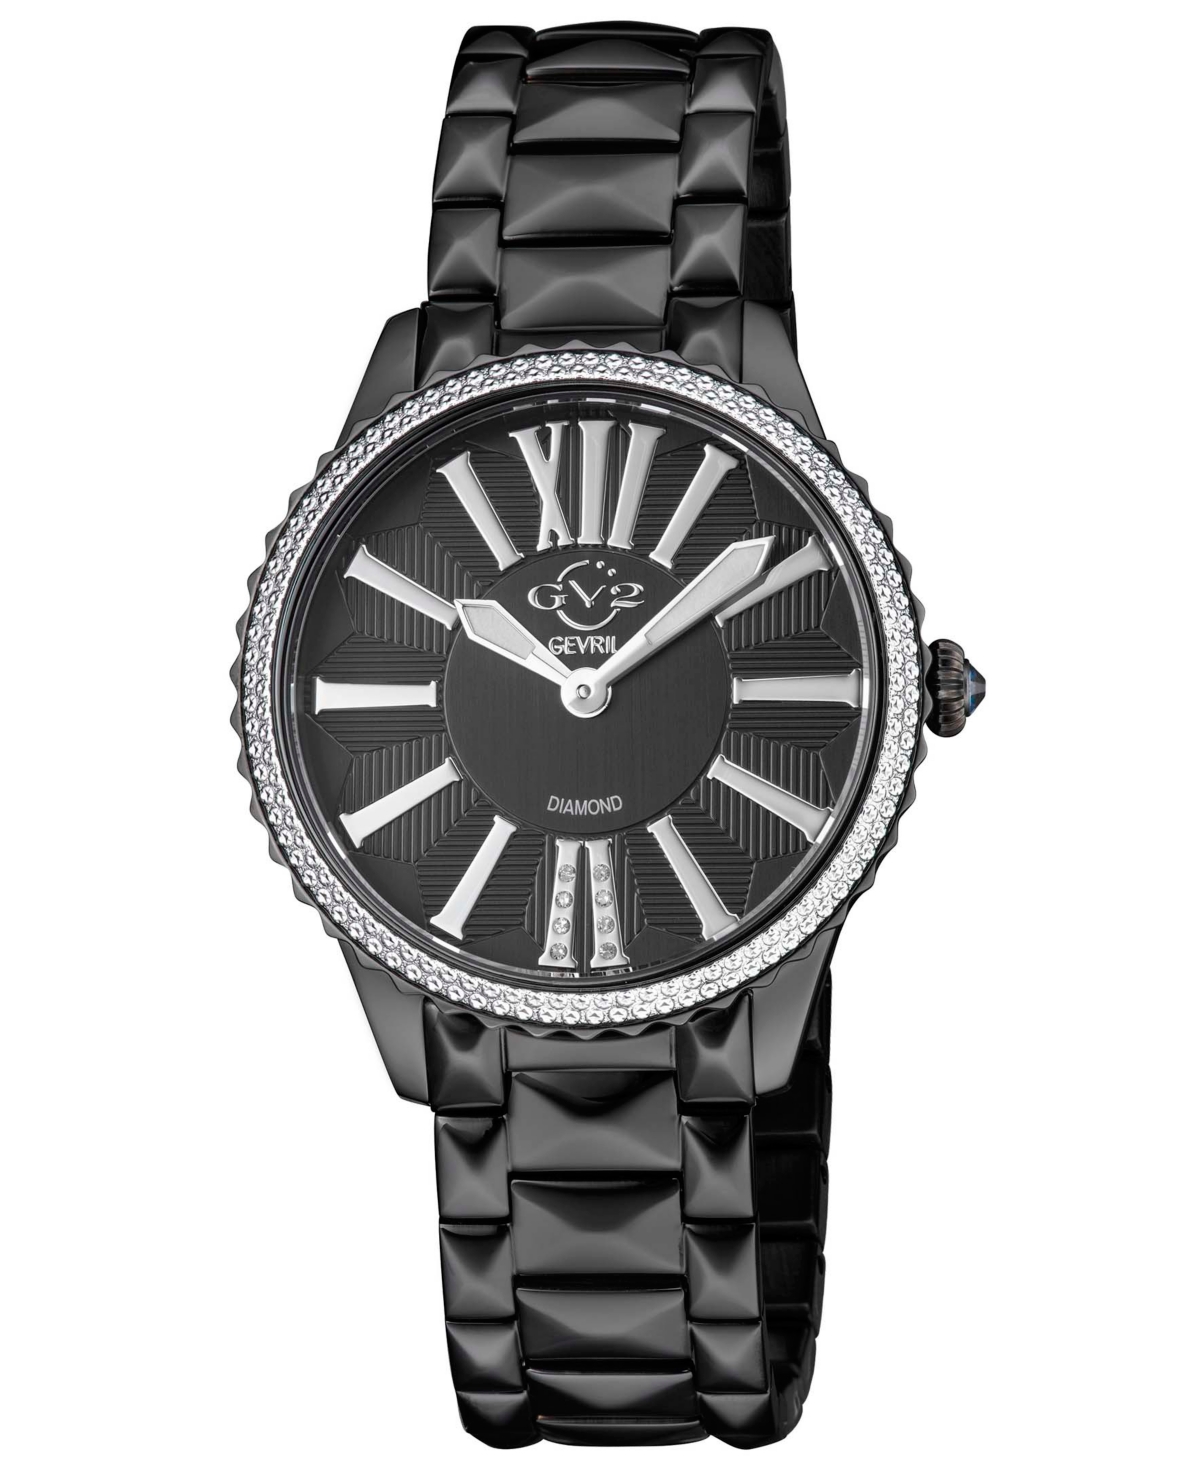 Gv2 By Gevril Women's Siena Swiss Quartz Black Stainless Steel Watch 37mm